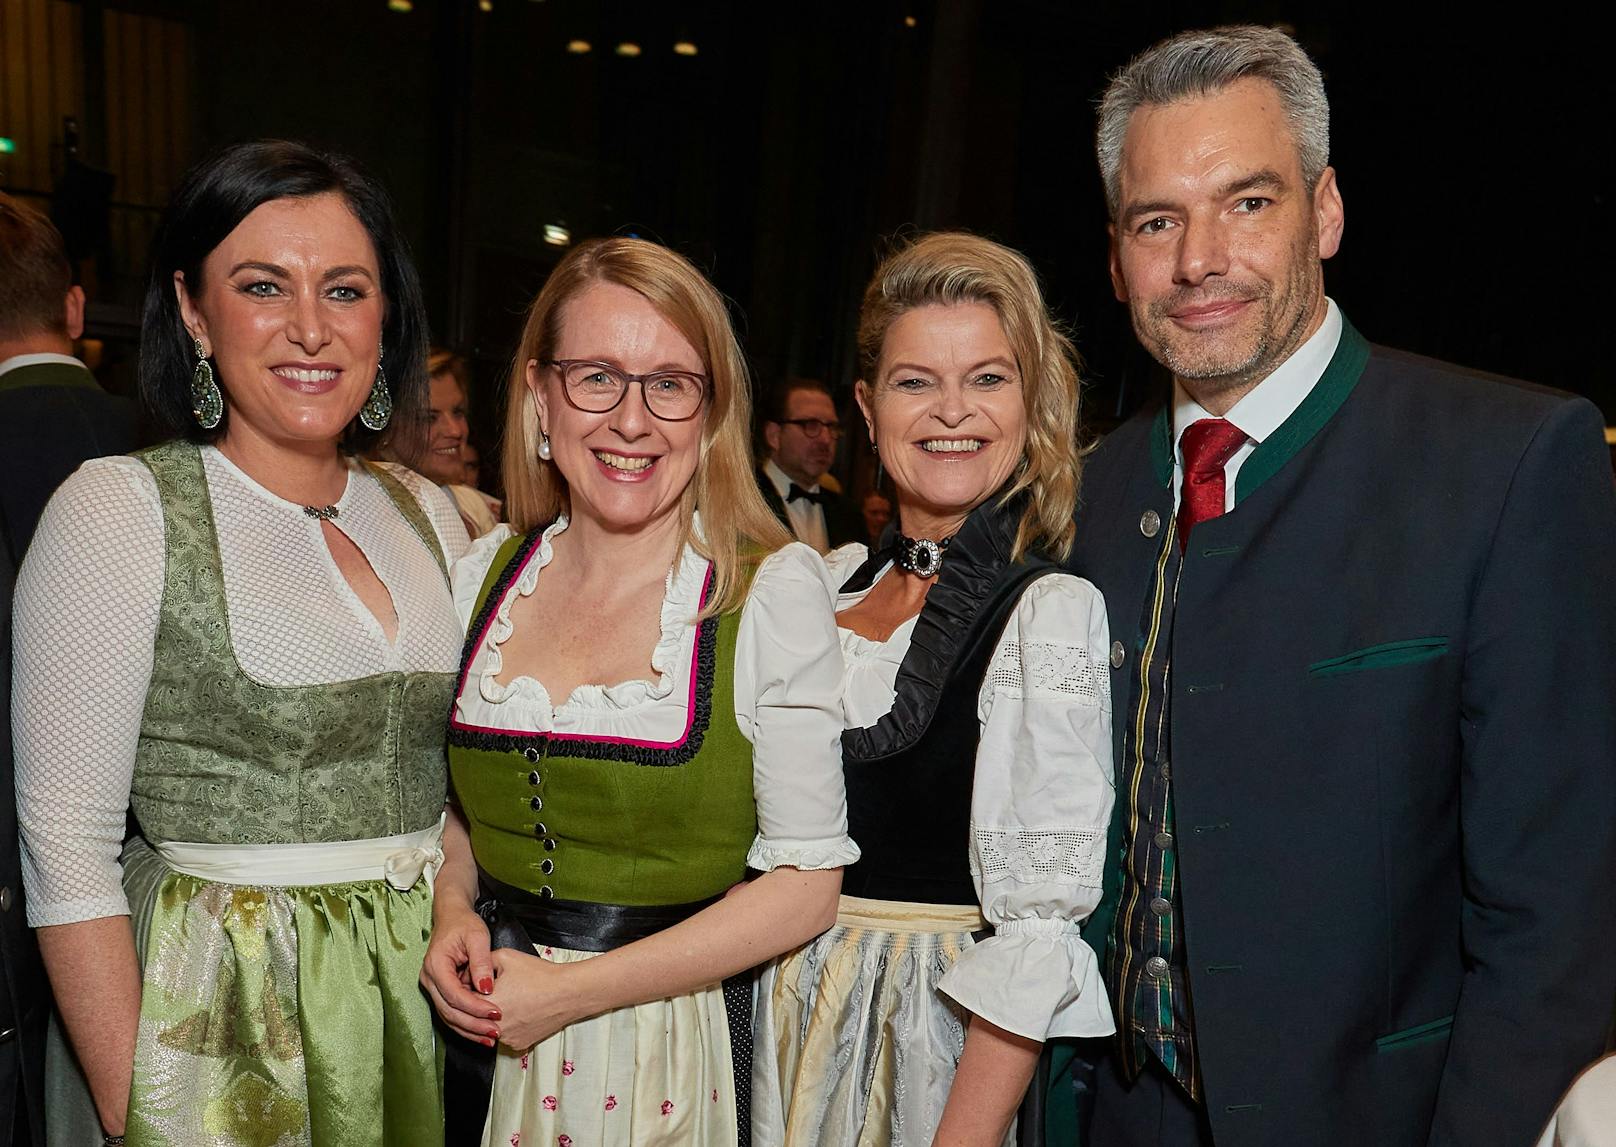 Elisabeth Köstinger, Margarete Schramböck, Klaudia Tanner und Karl Nehammer bei Jägerball